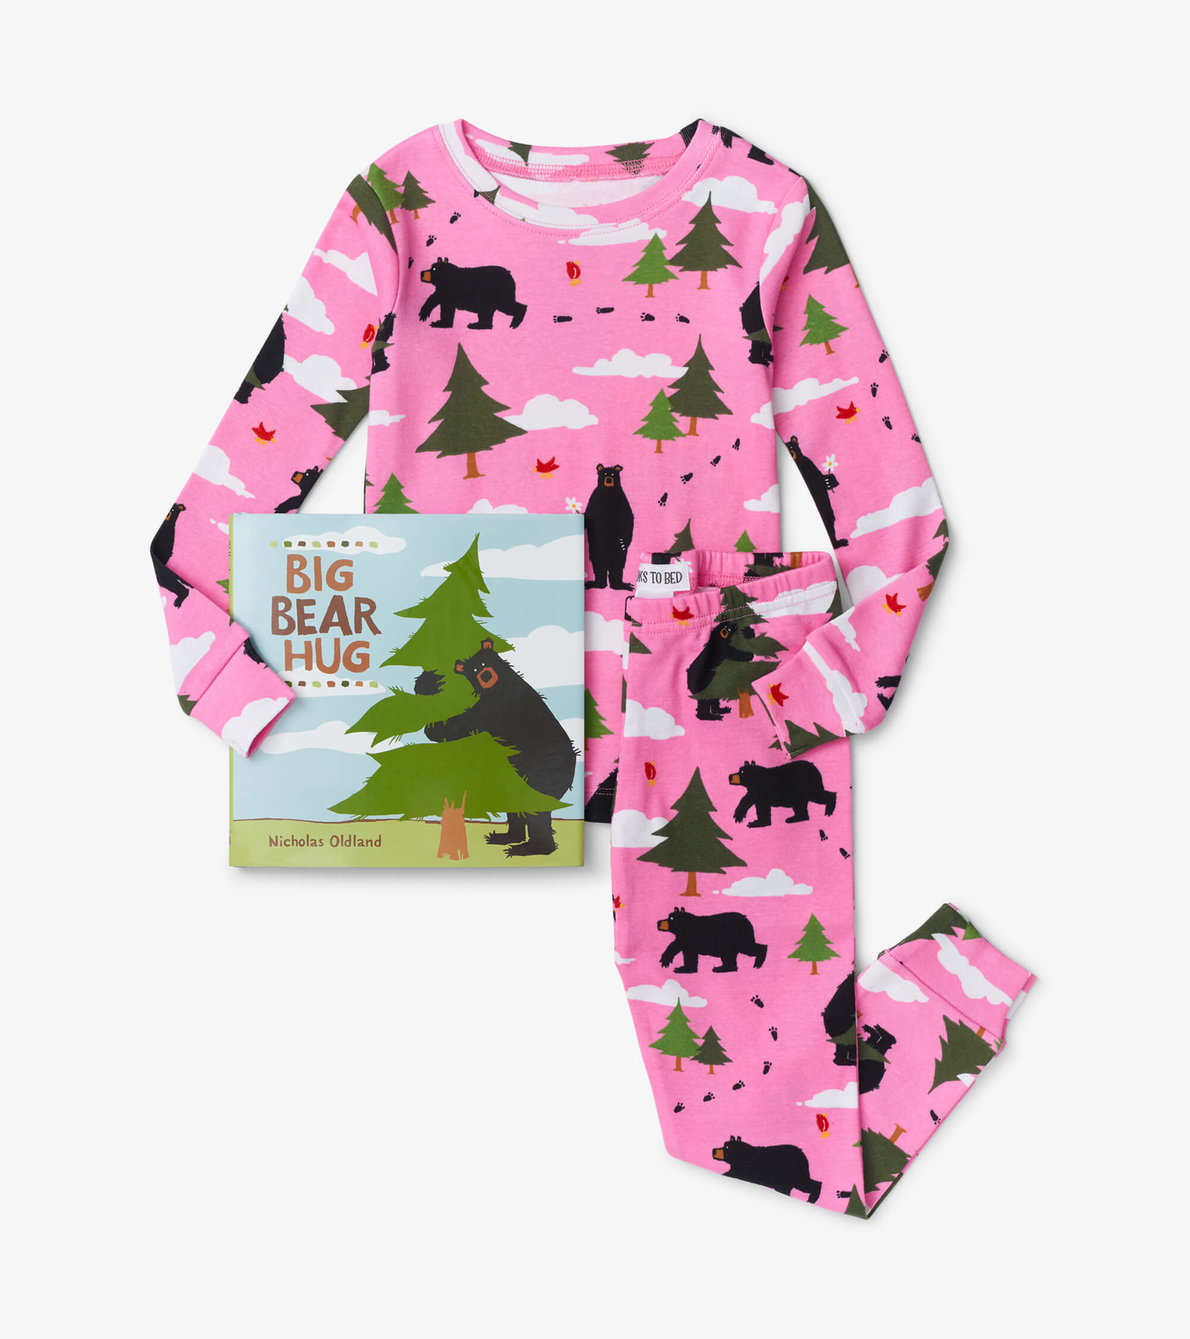 View larger image of Pink Big Bear Hug Book and Pajama Set